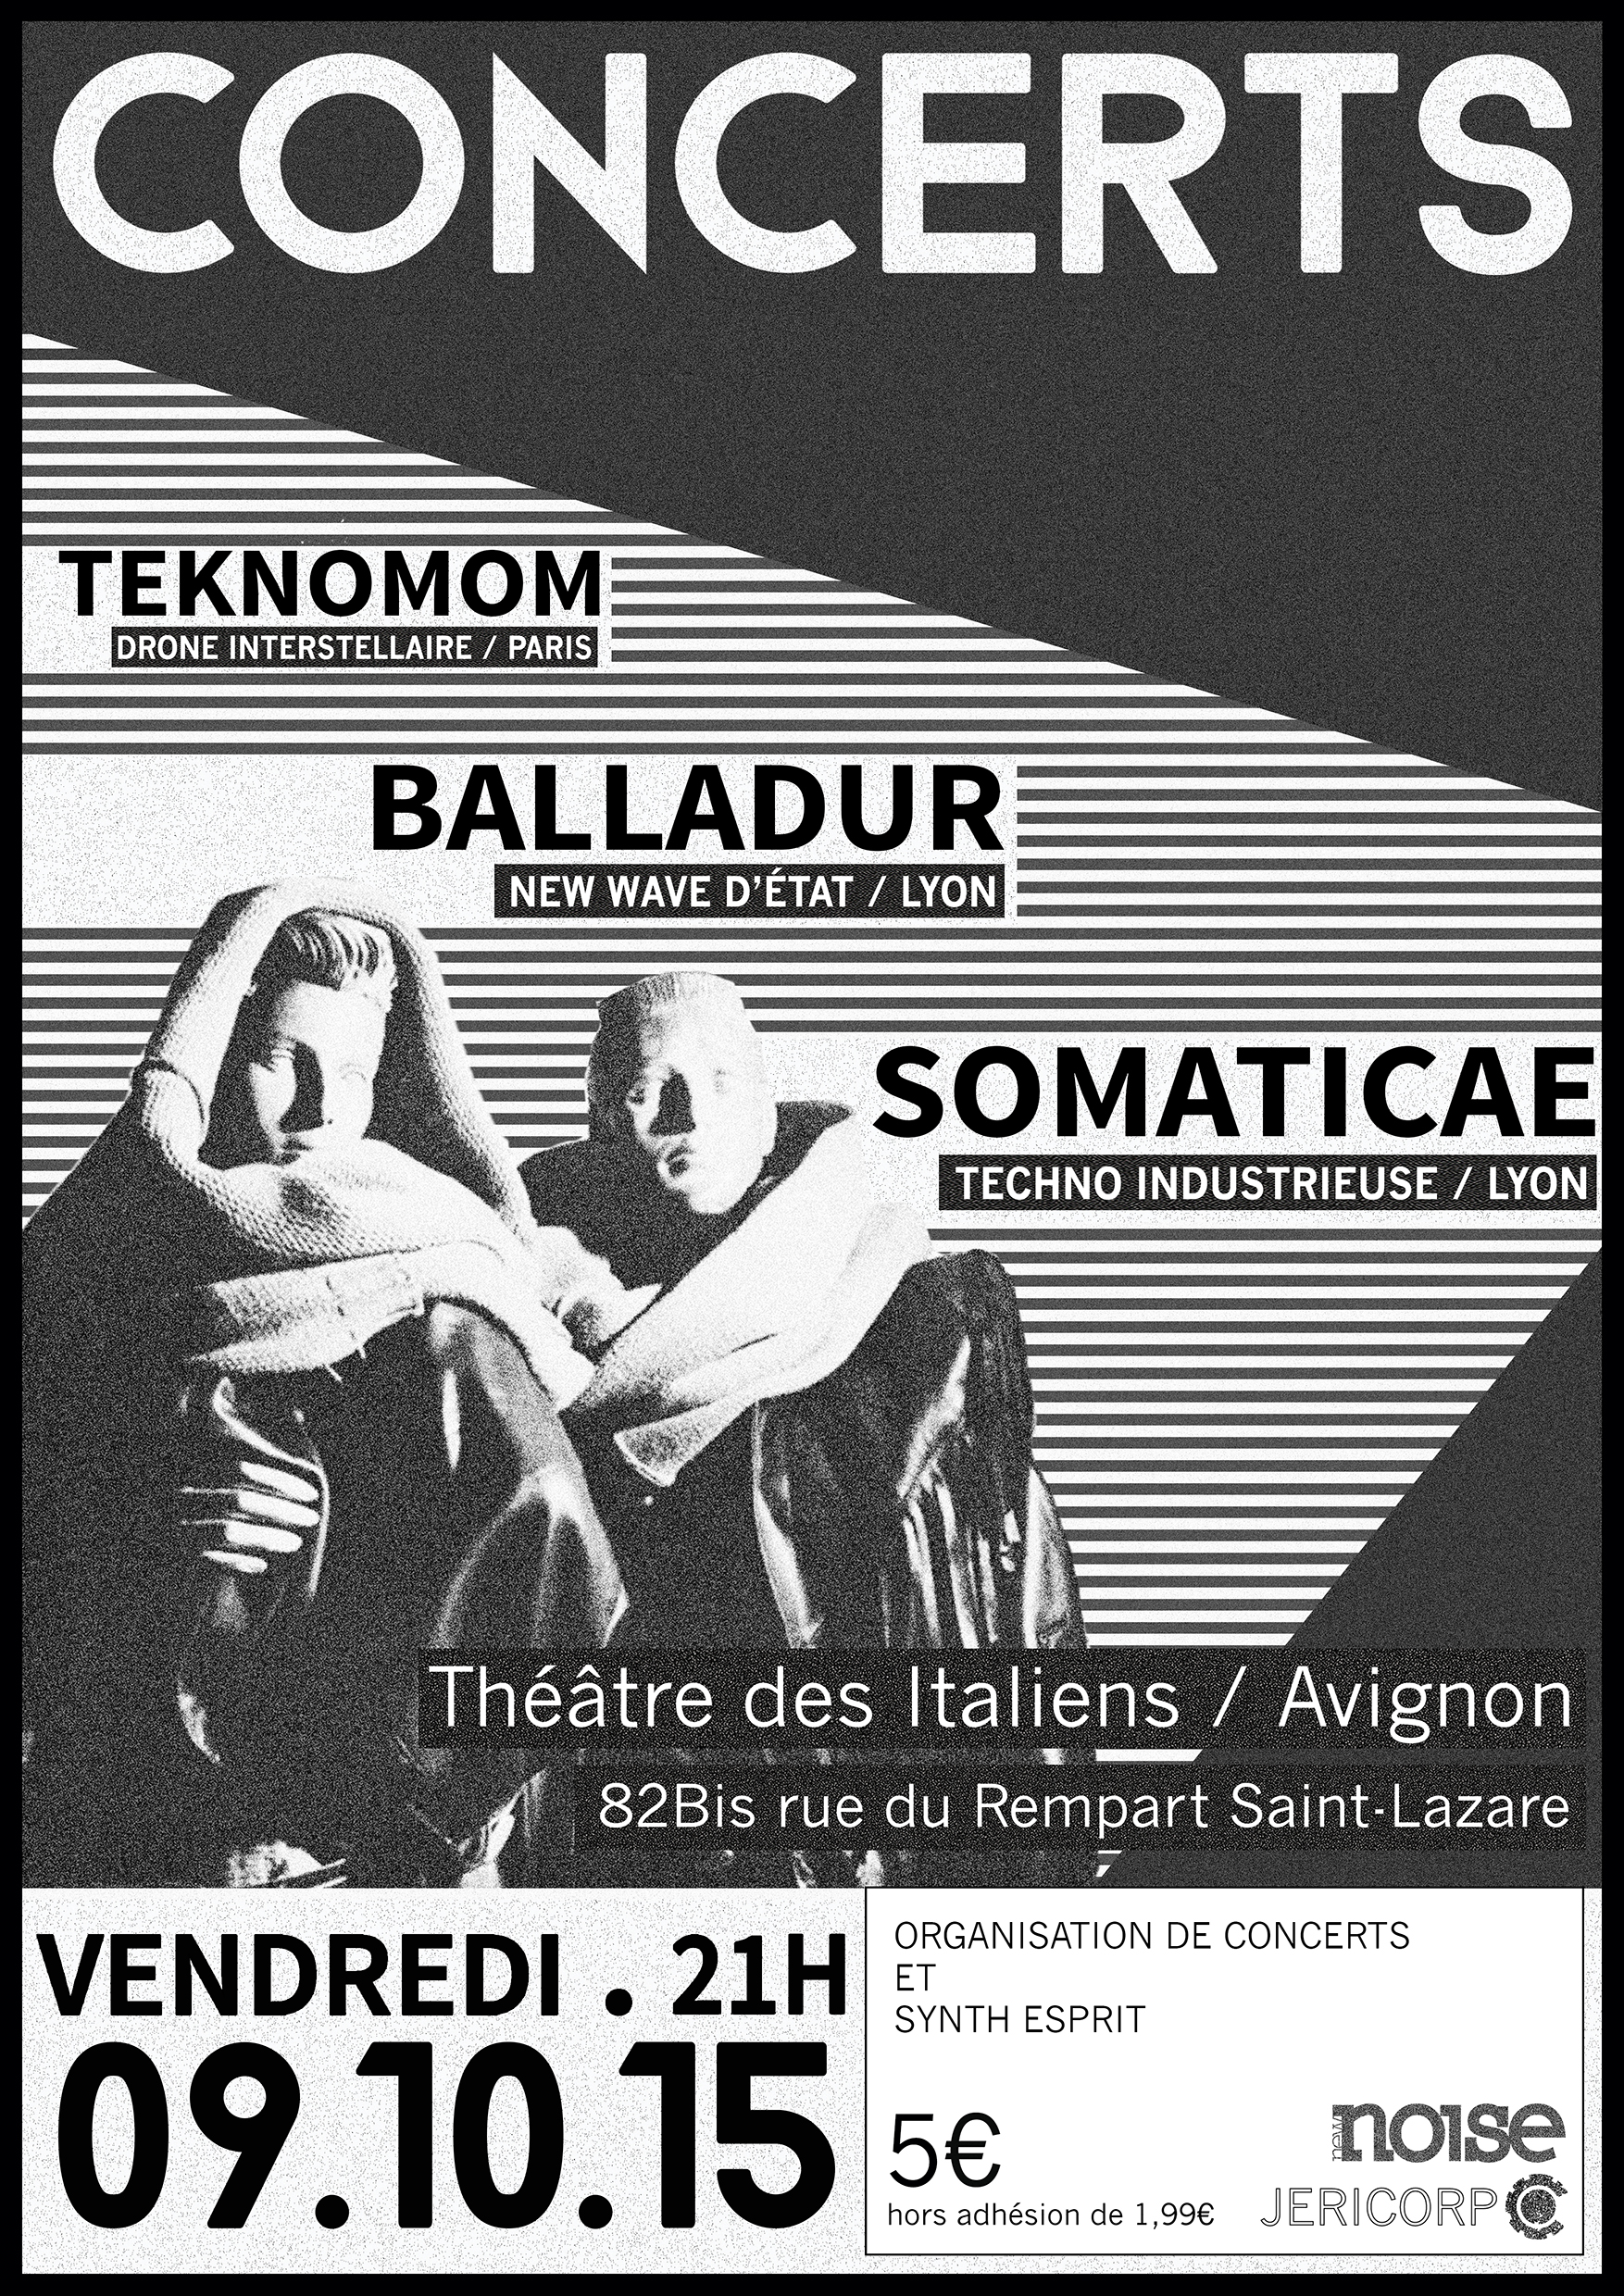 Balladur - Somaticae - Teknomom